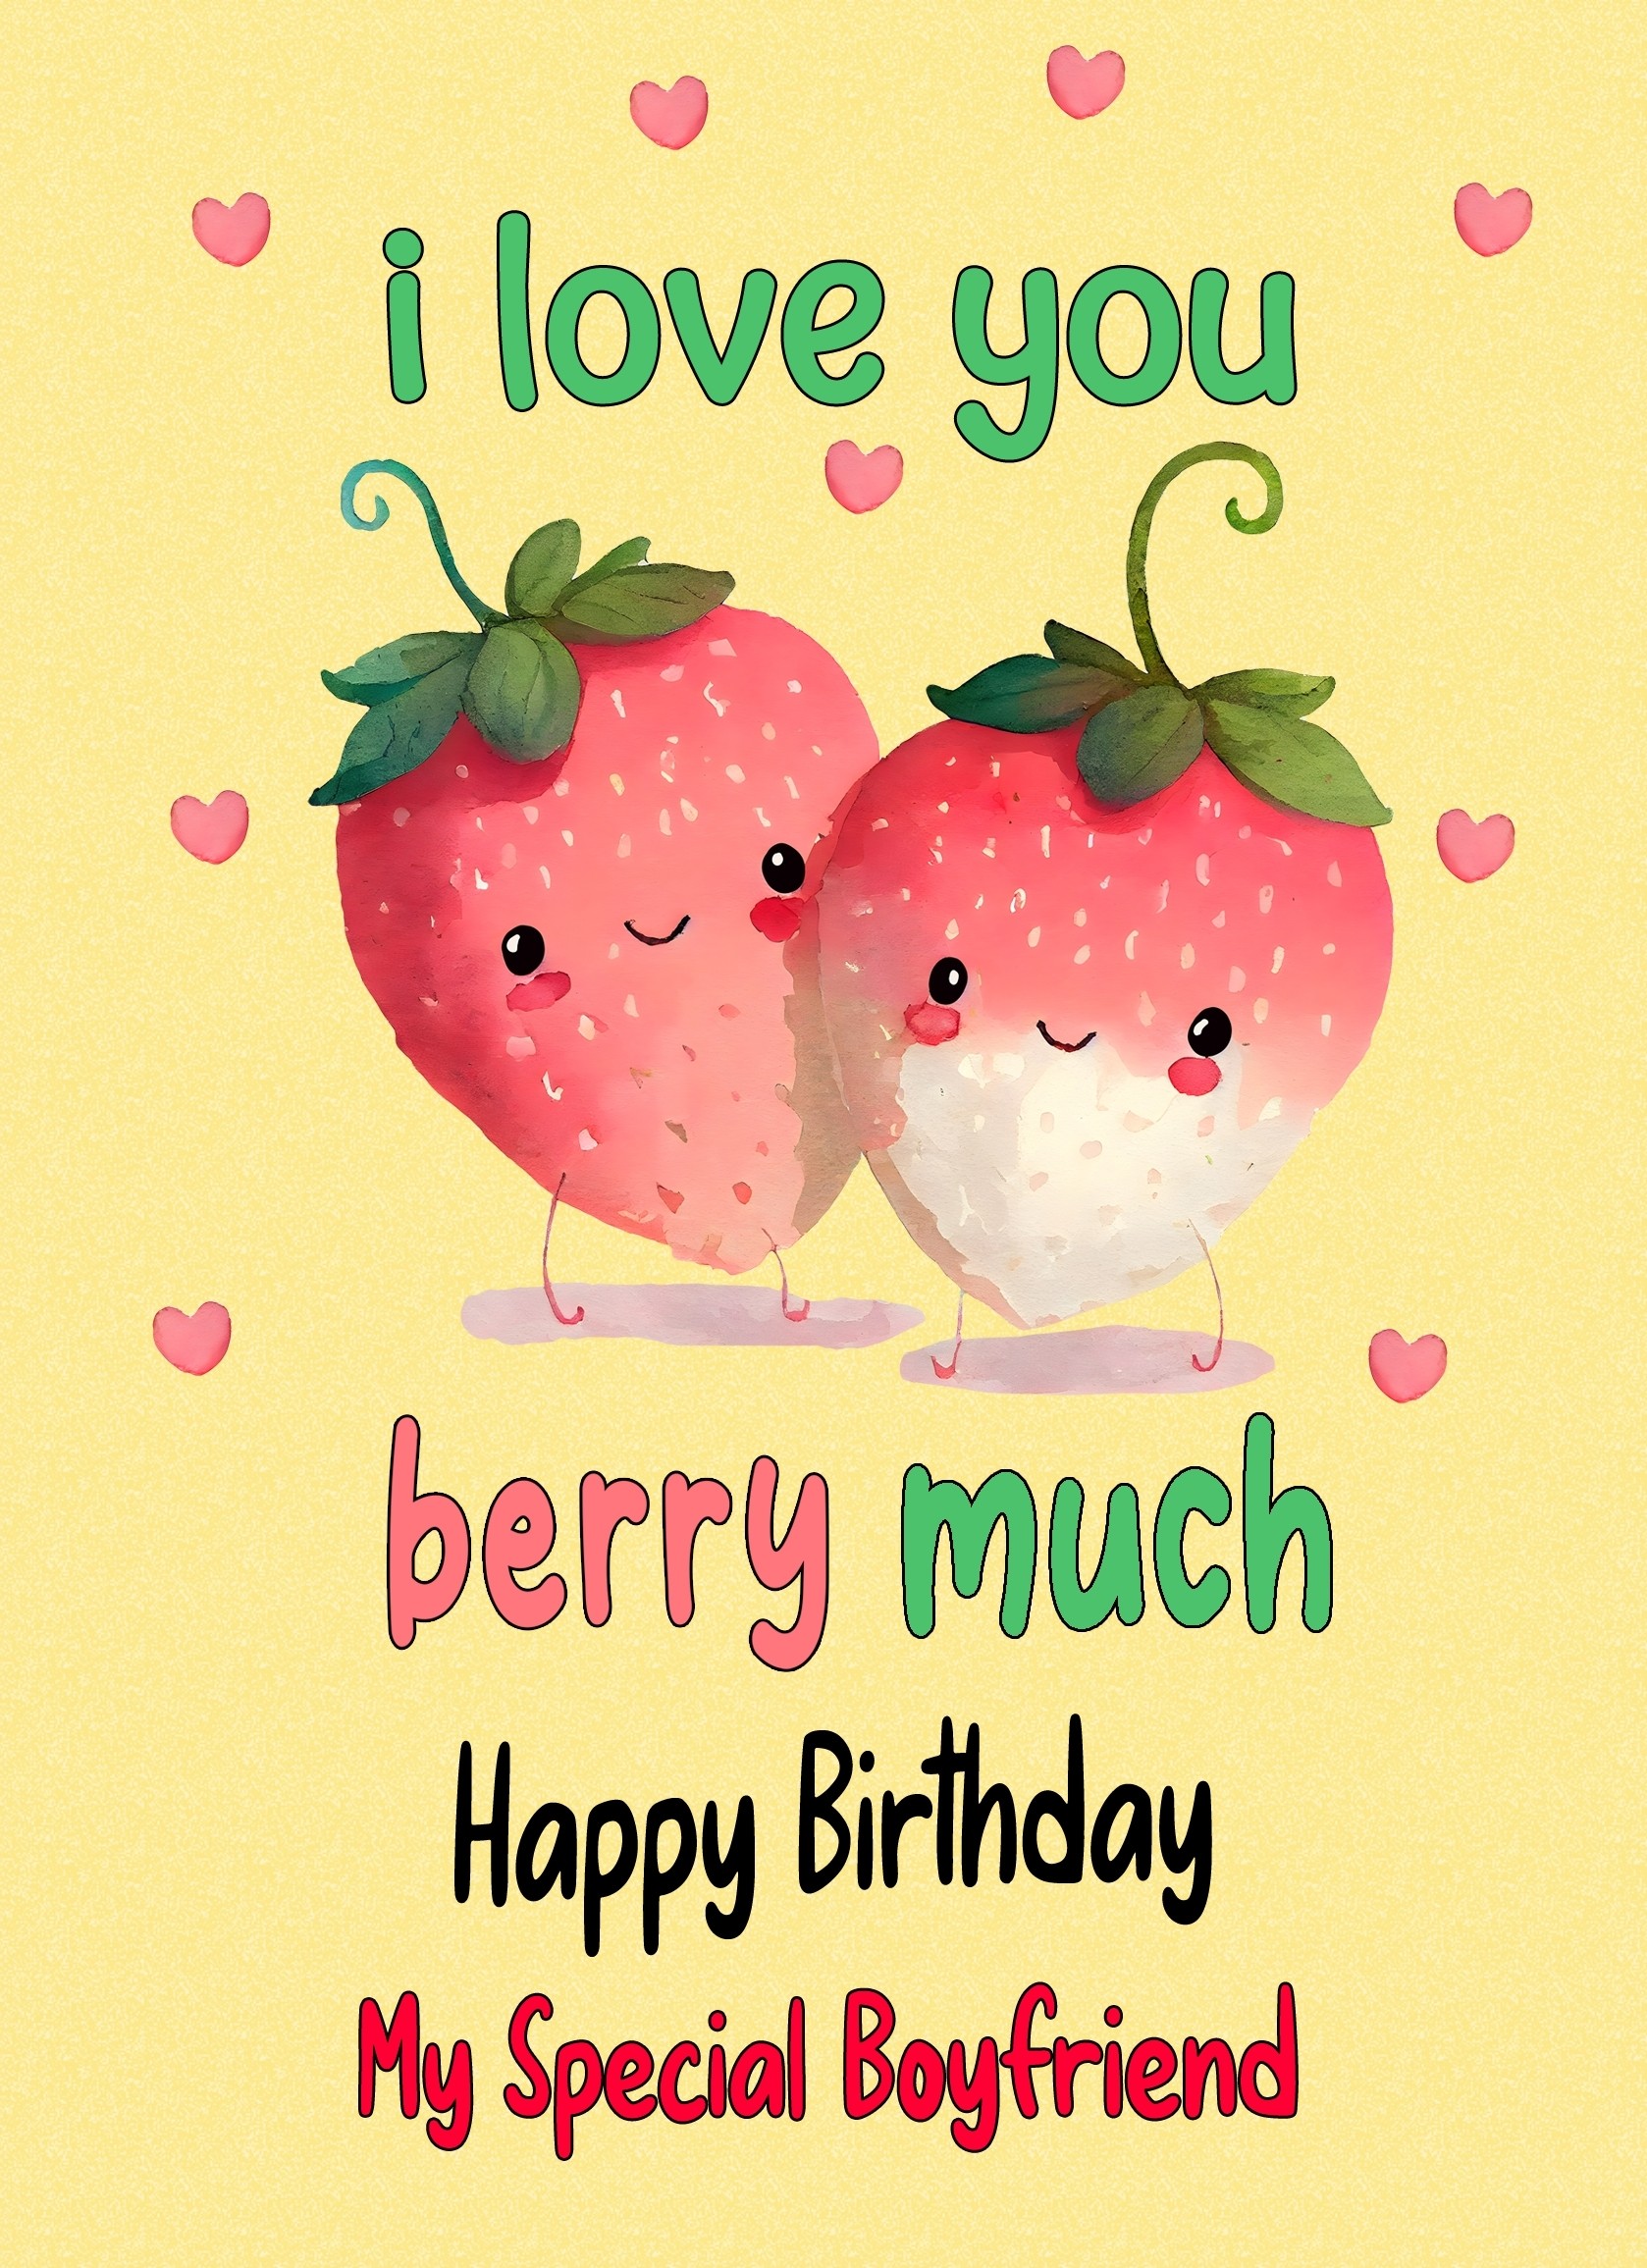 Funny Pun Romantic Birthday Card for Boyfriend (Berry Much)